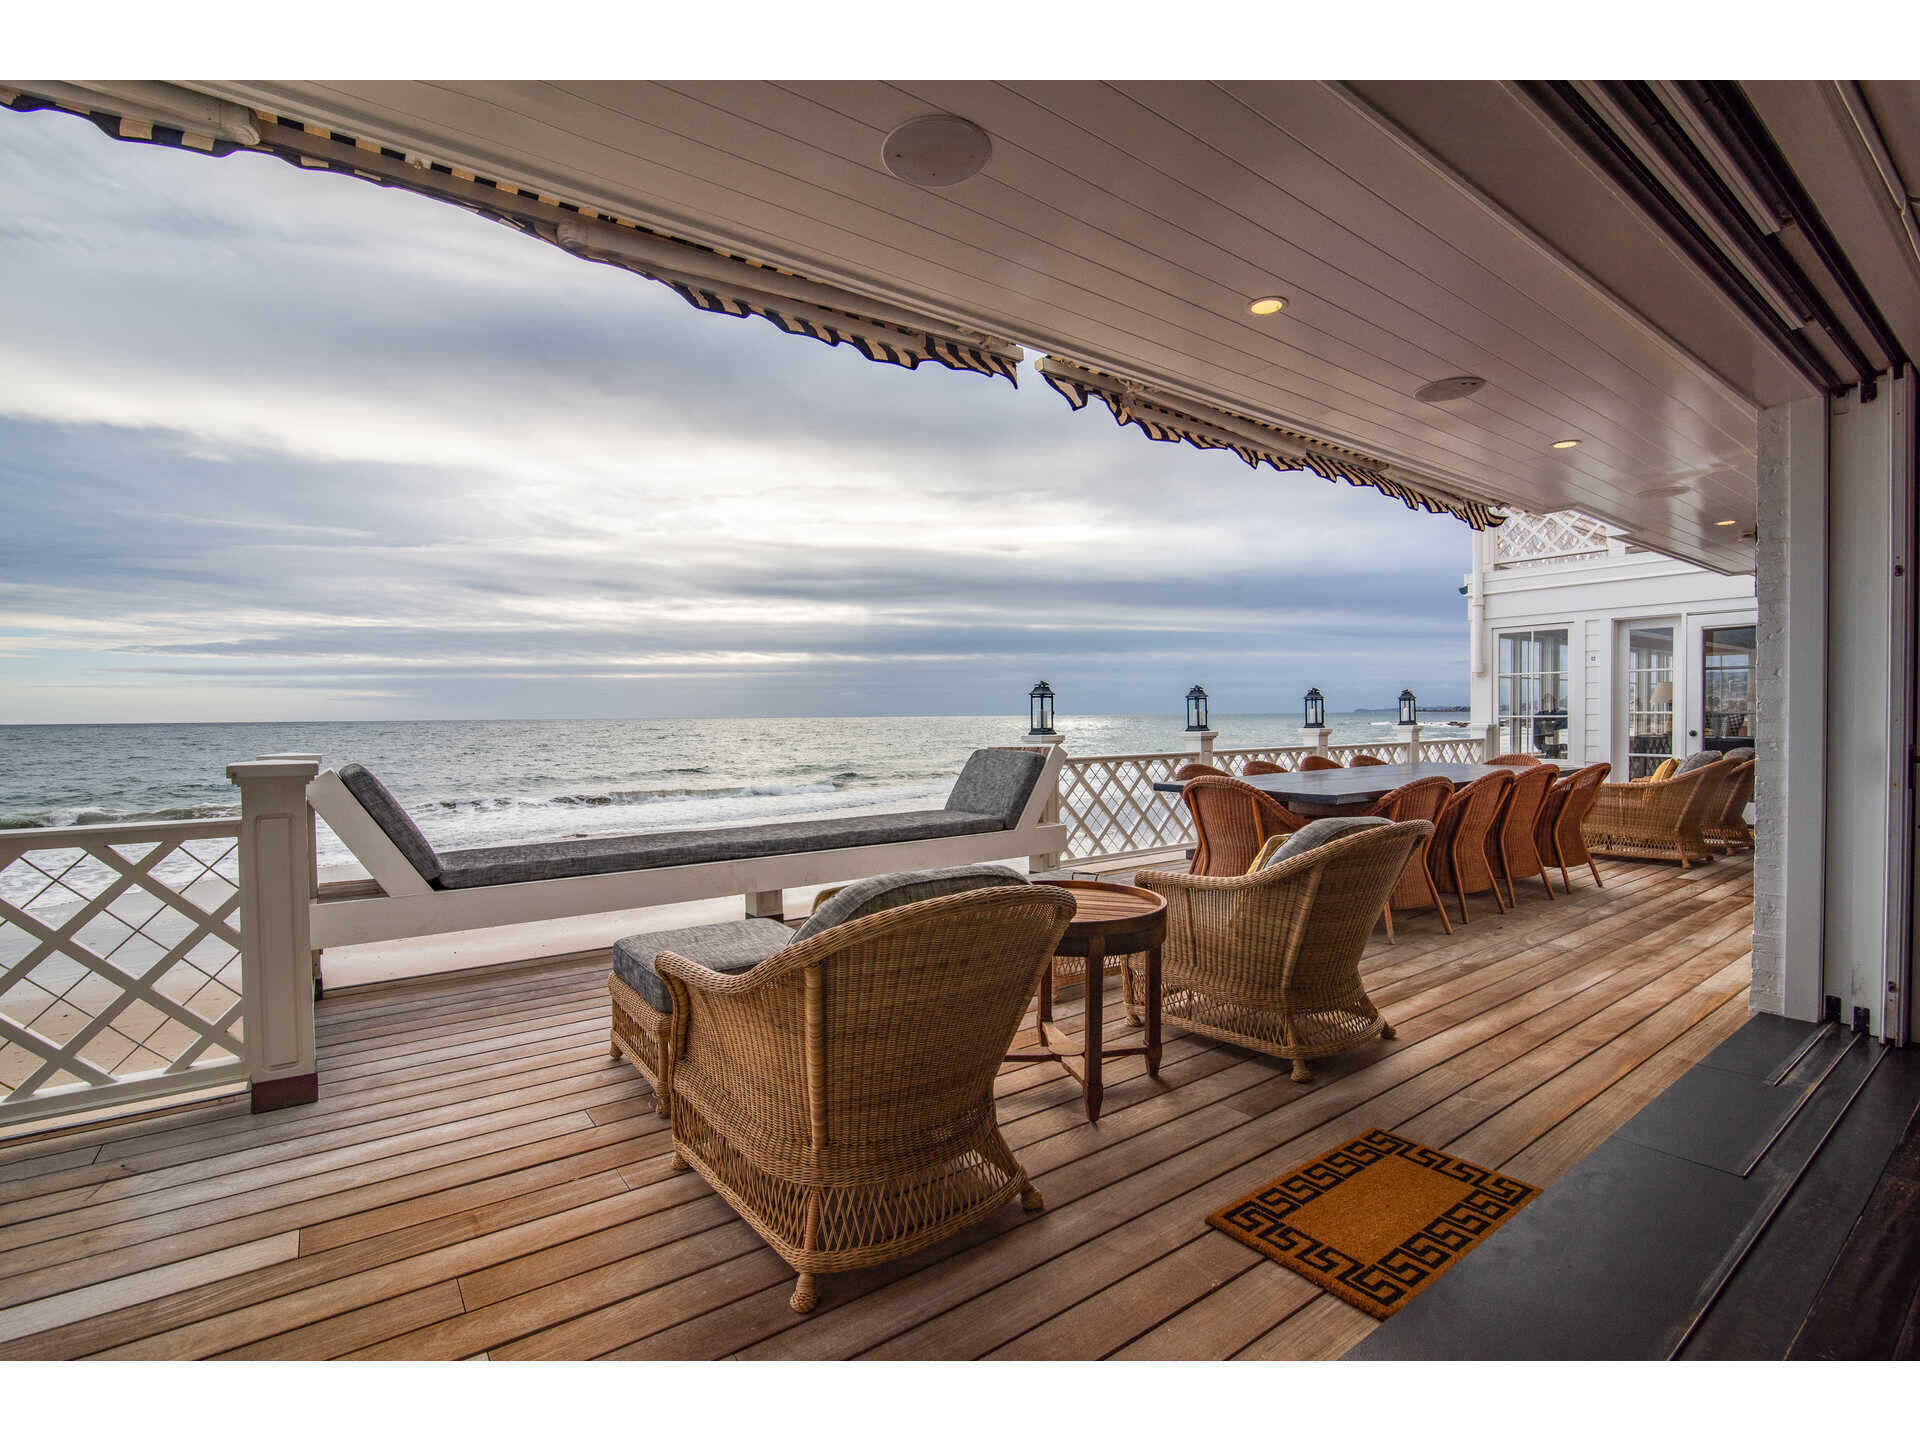 Francis York A Resort Developer’s Oceanfront Malibu Mansion19.jpg